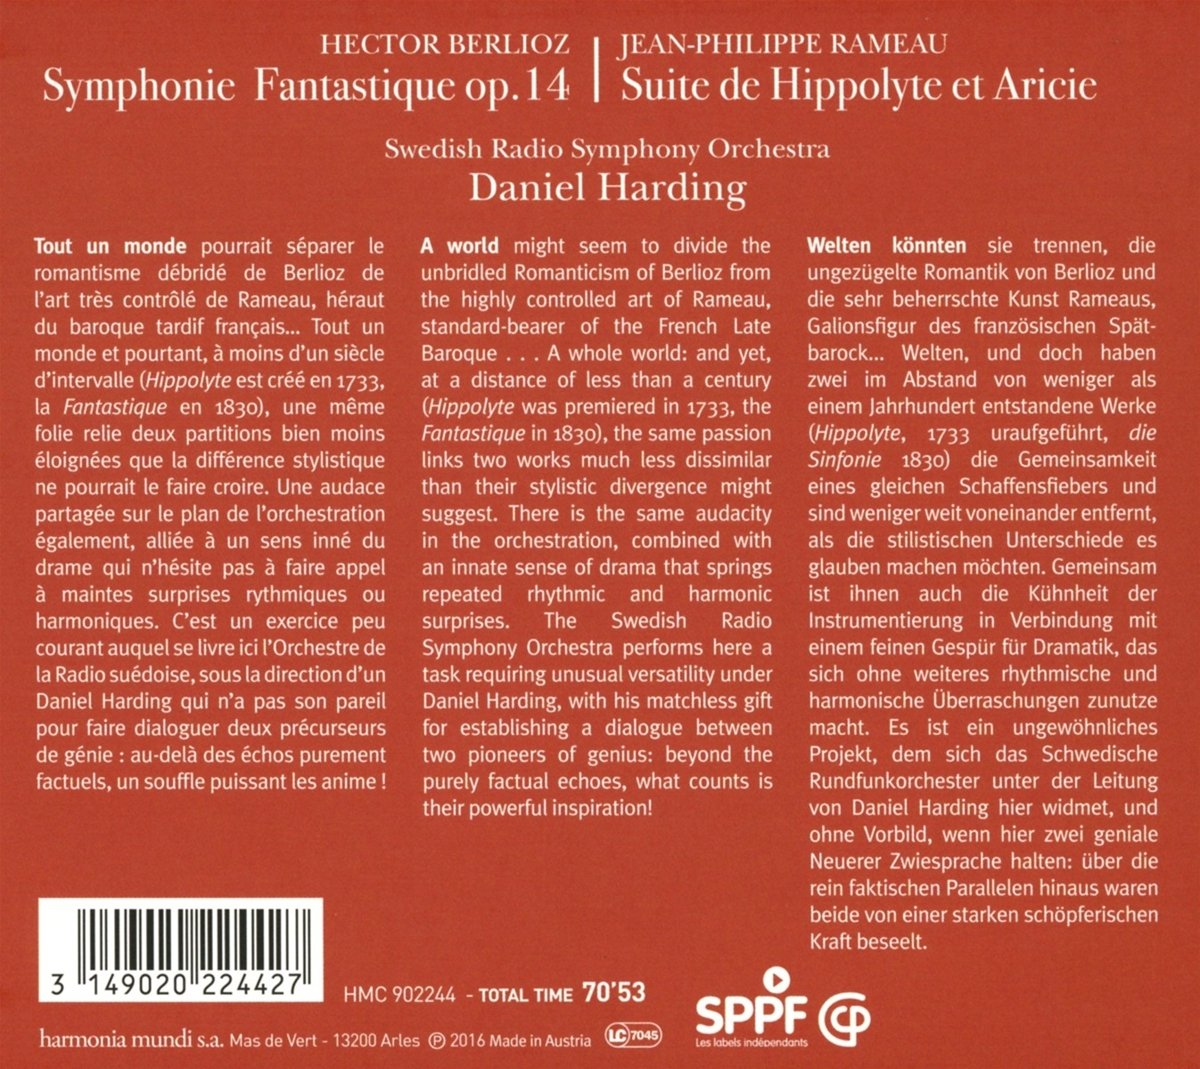 Berlioz: Symphonie fantastique - slide-1